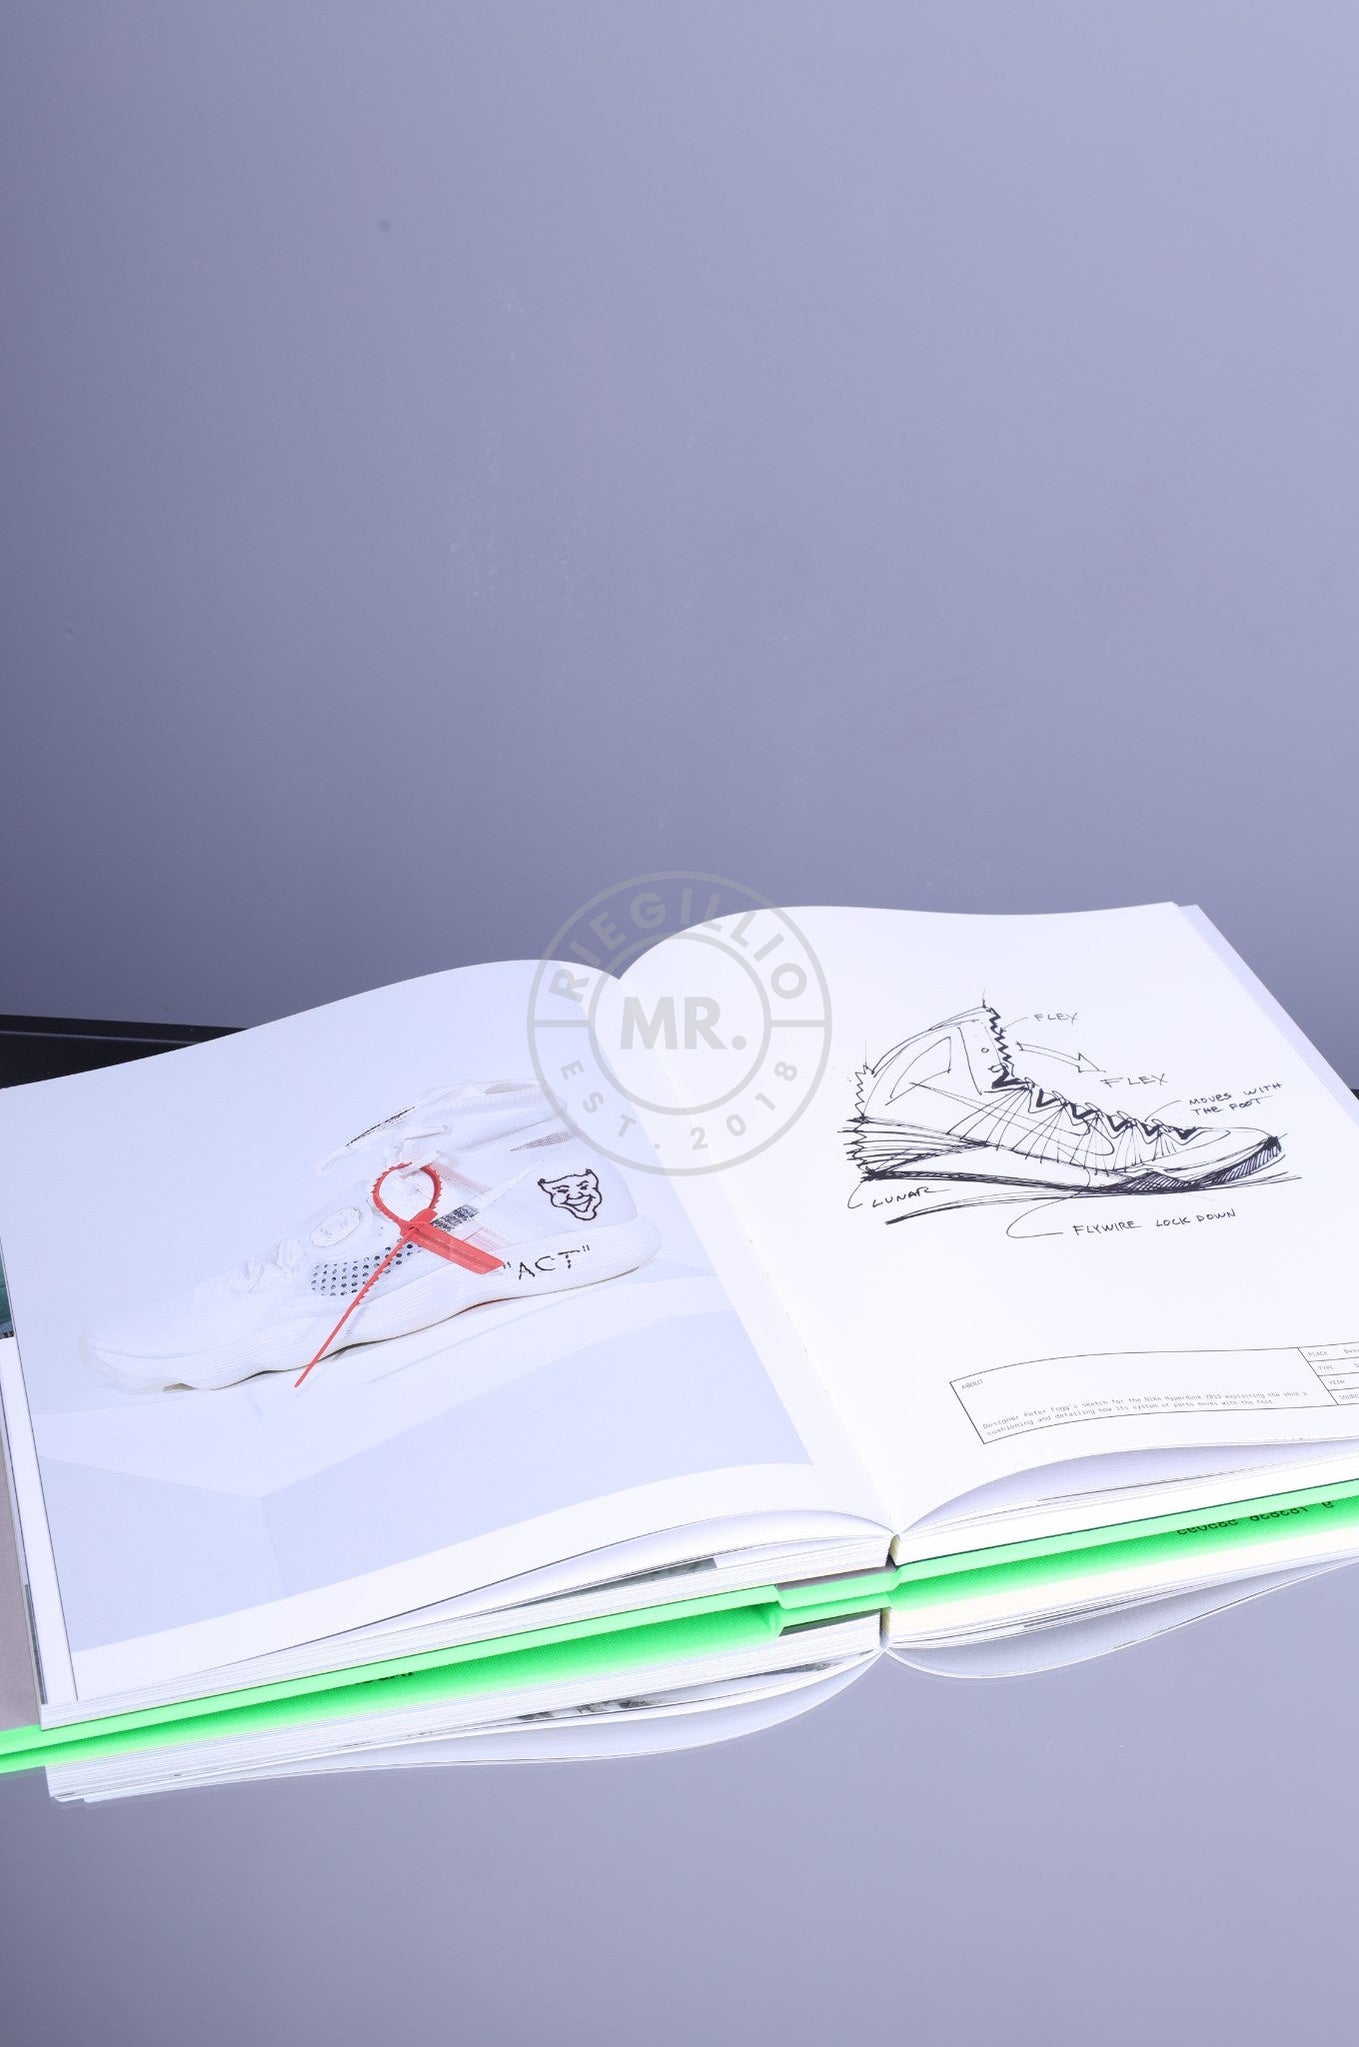 Table Book Virgil Abloh. Nike. ICONS at MR. Riegillio